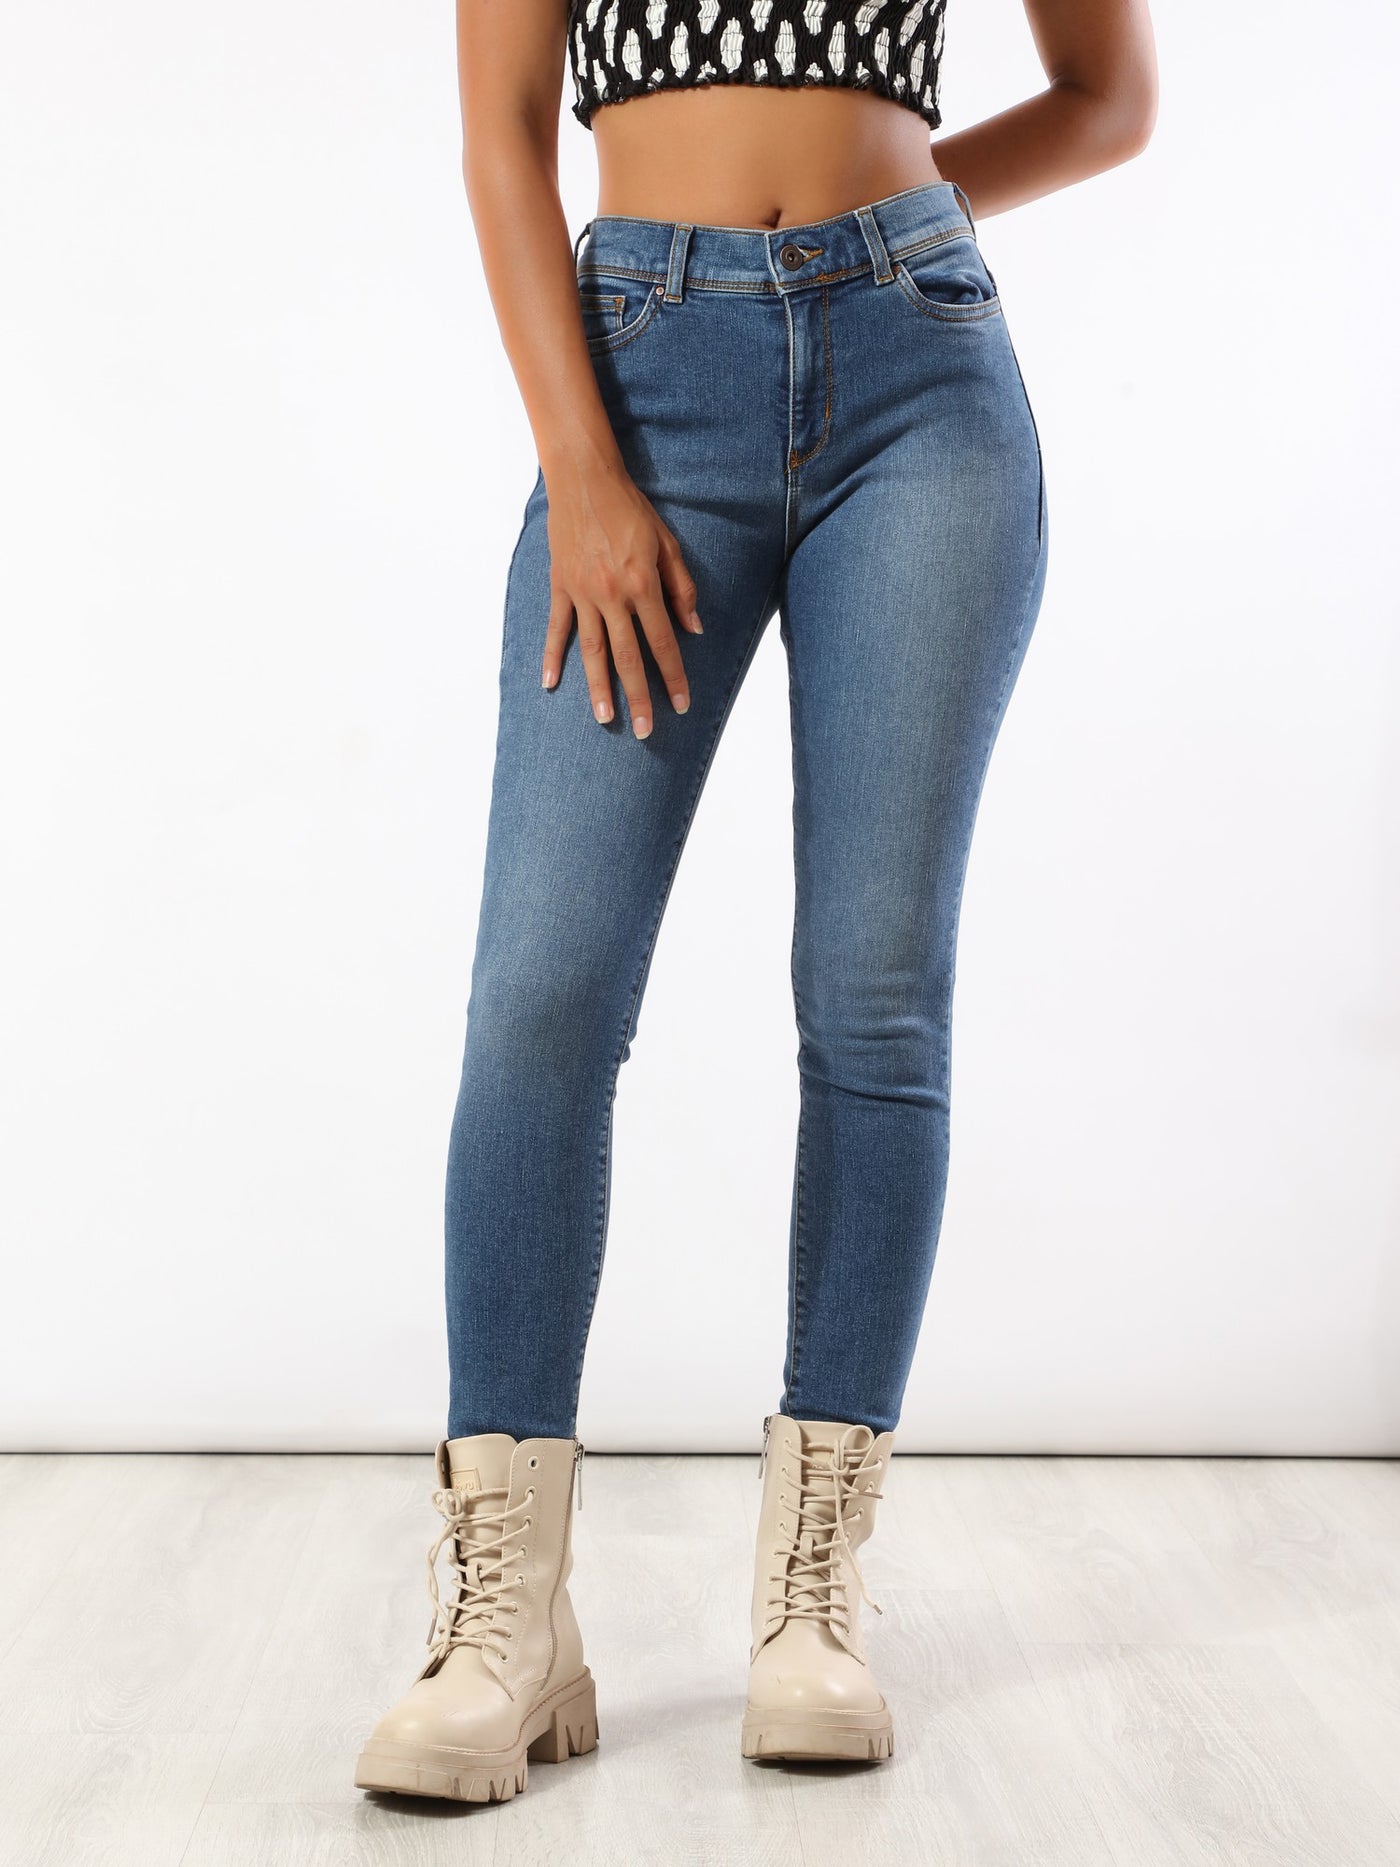 Jeans - Skinny Fit - Plain